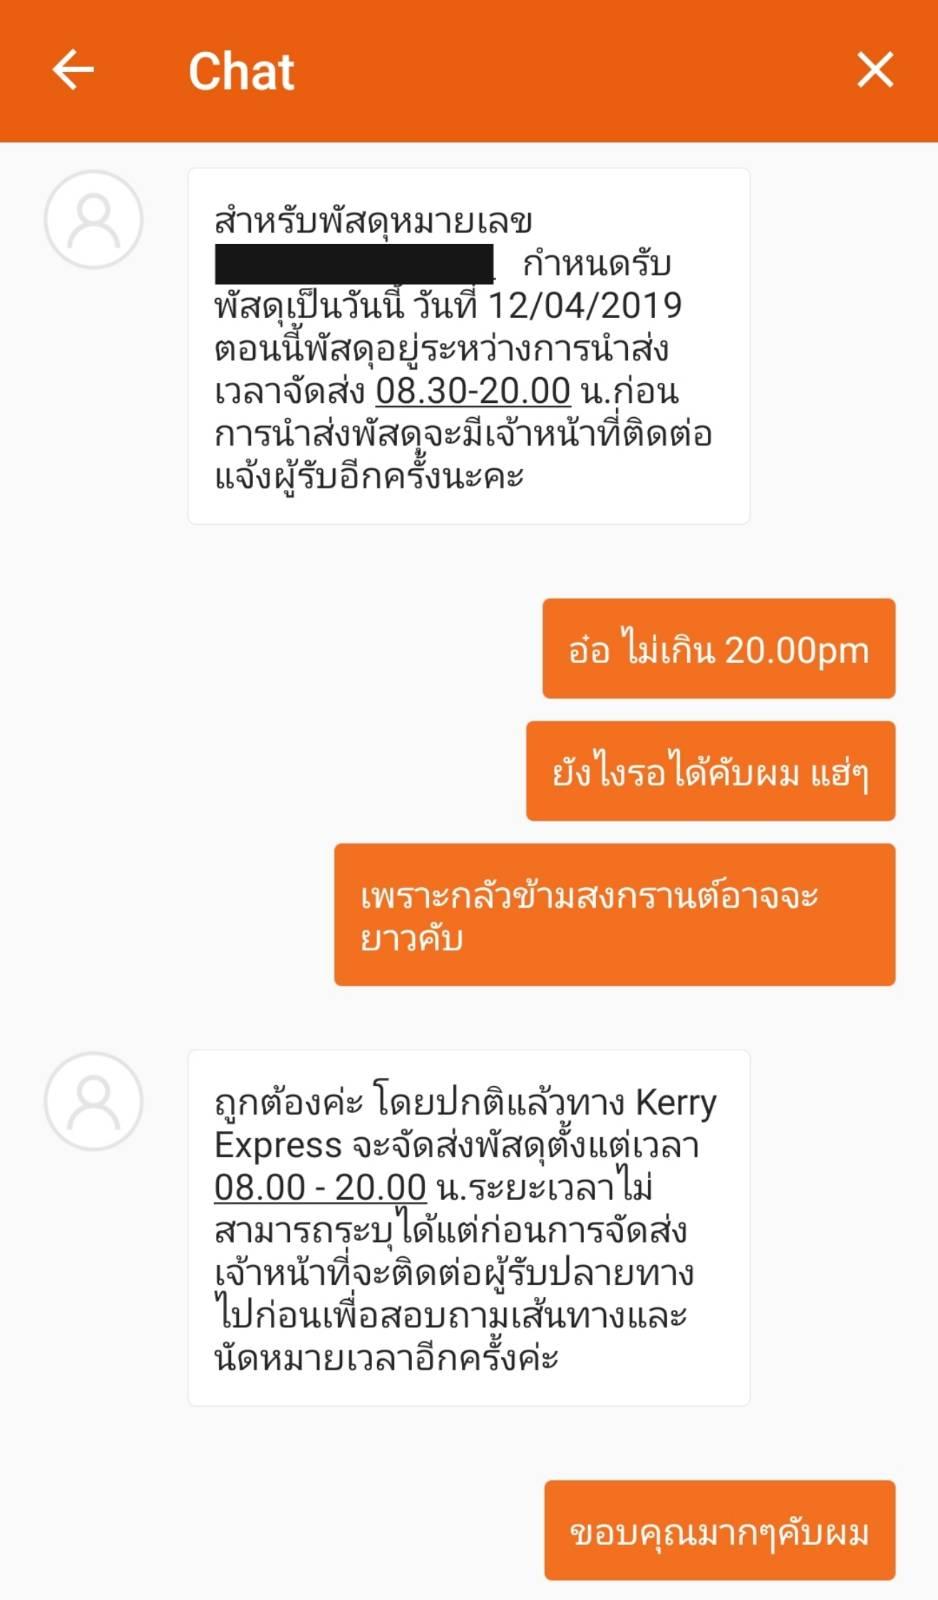 Kerry Express ระบบ Live Chat(จุดสำคัญ)  ที่ต้องปรับปรุงเพราะคุณคือบริษัทขนส่งสินค้า - Pantip